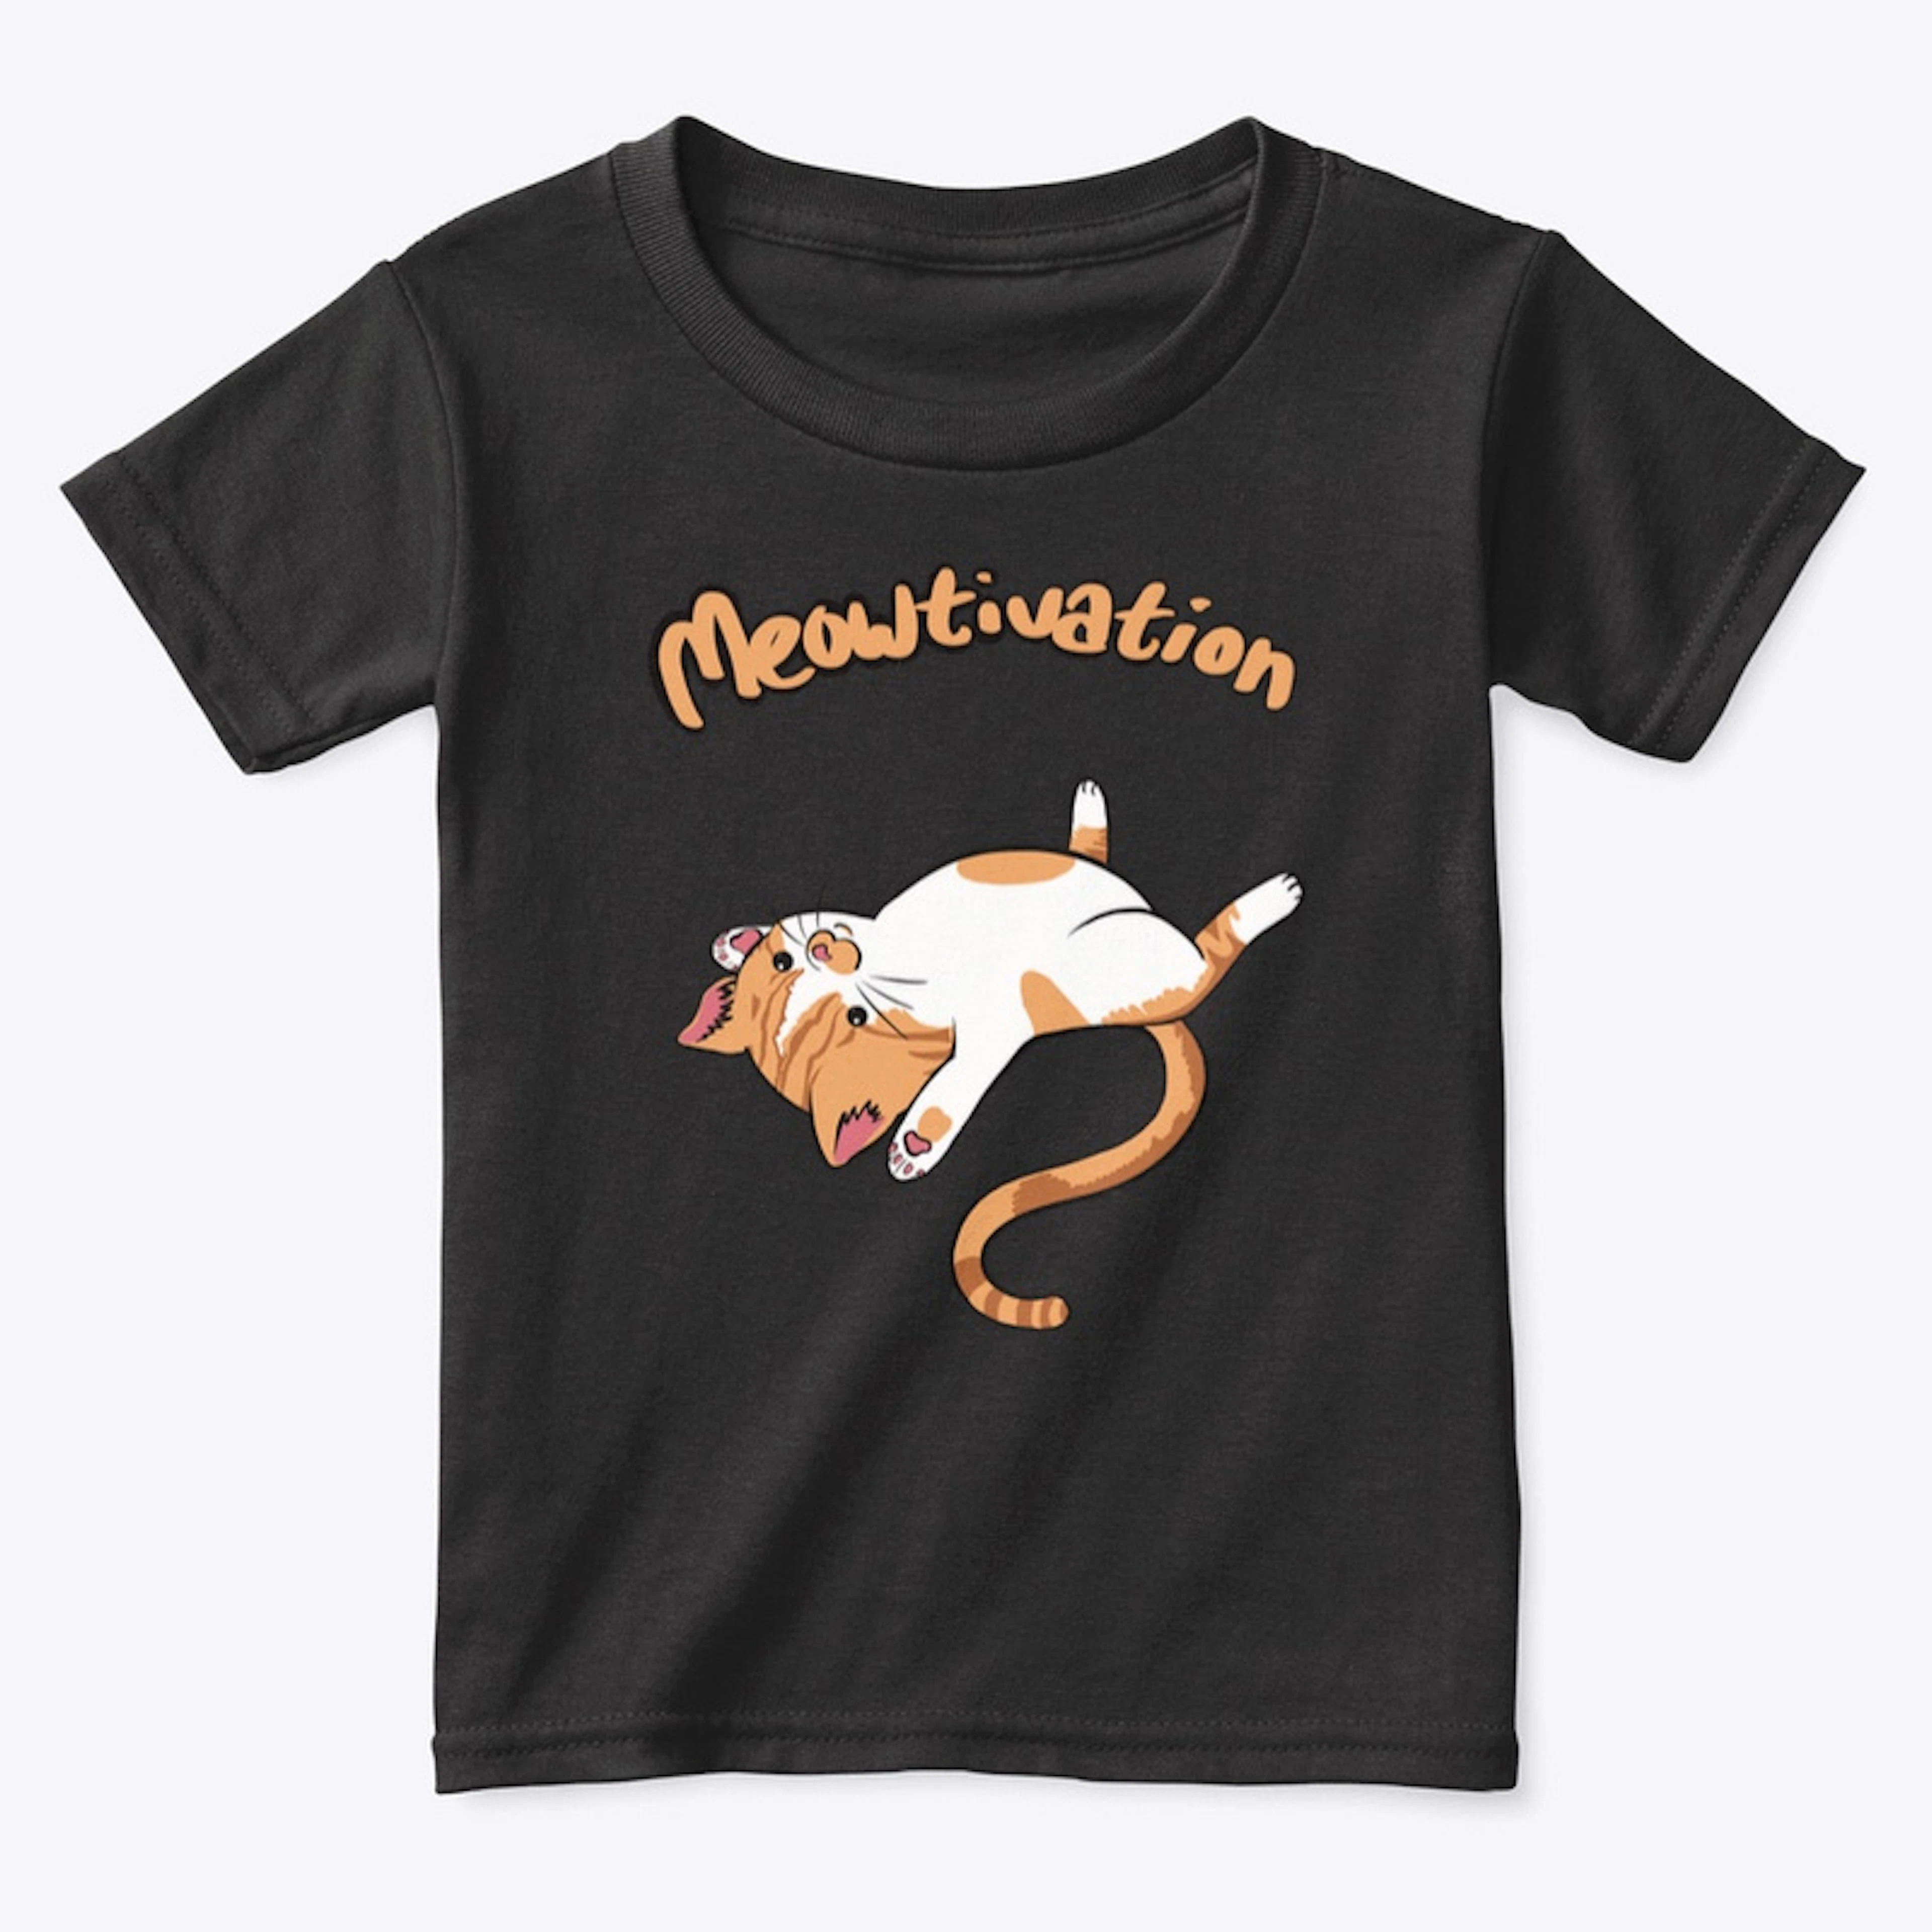 Meowtivation!